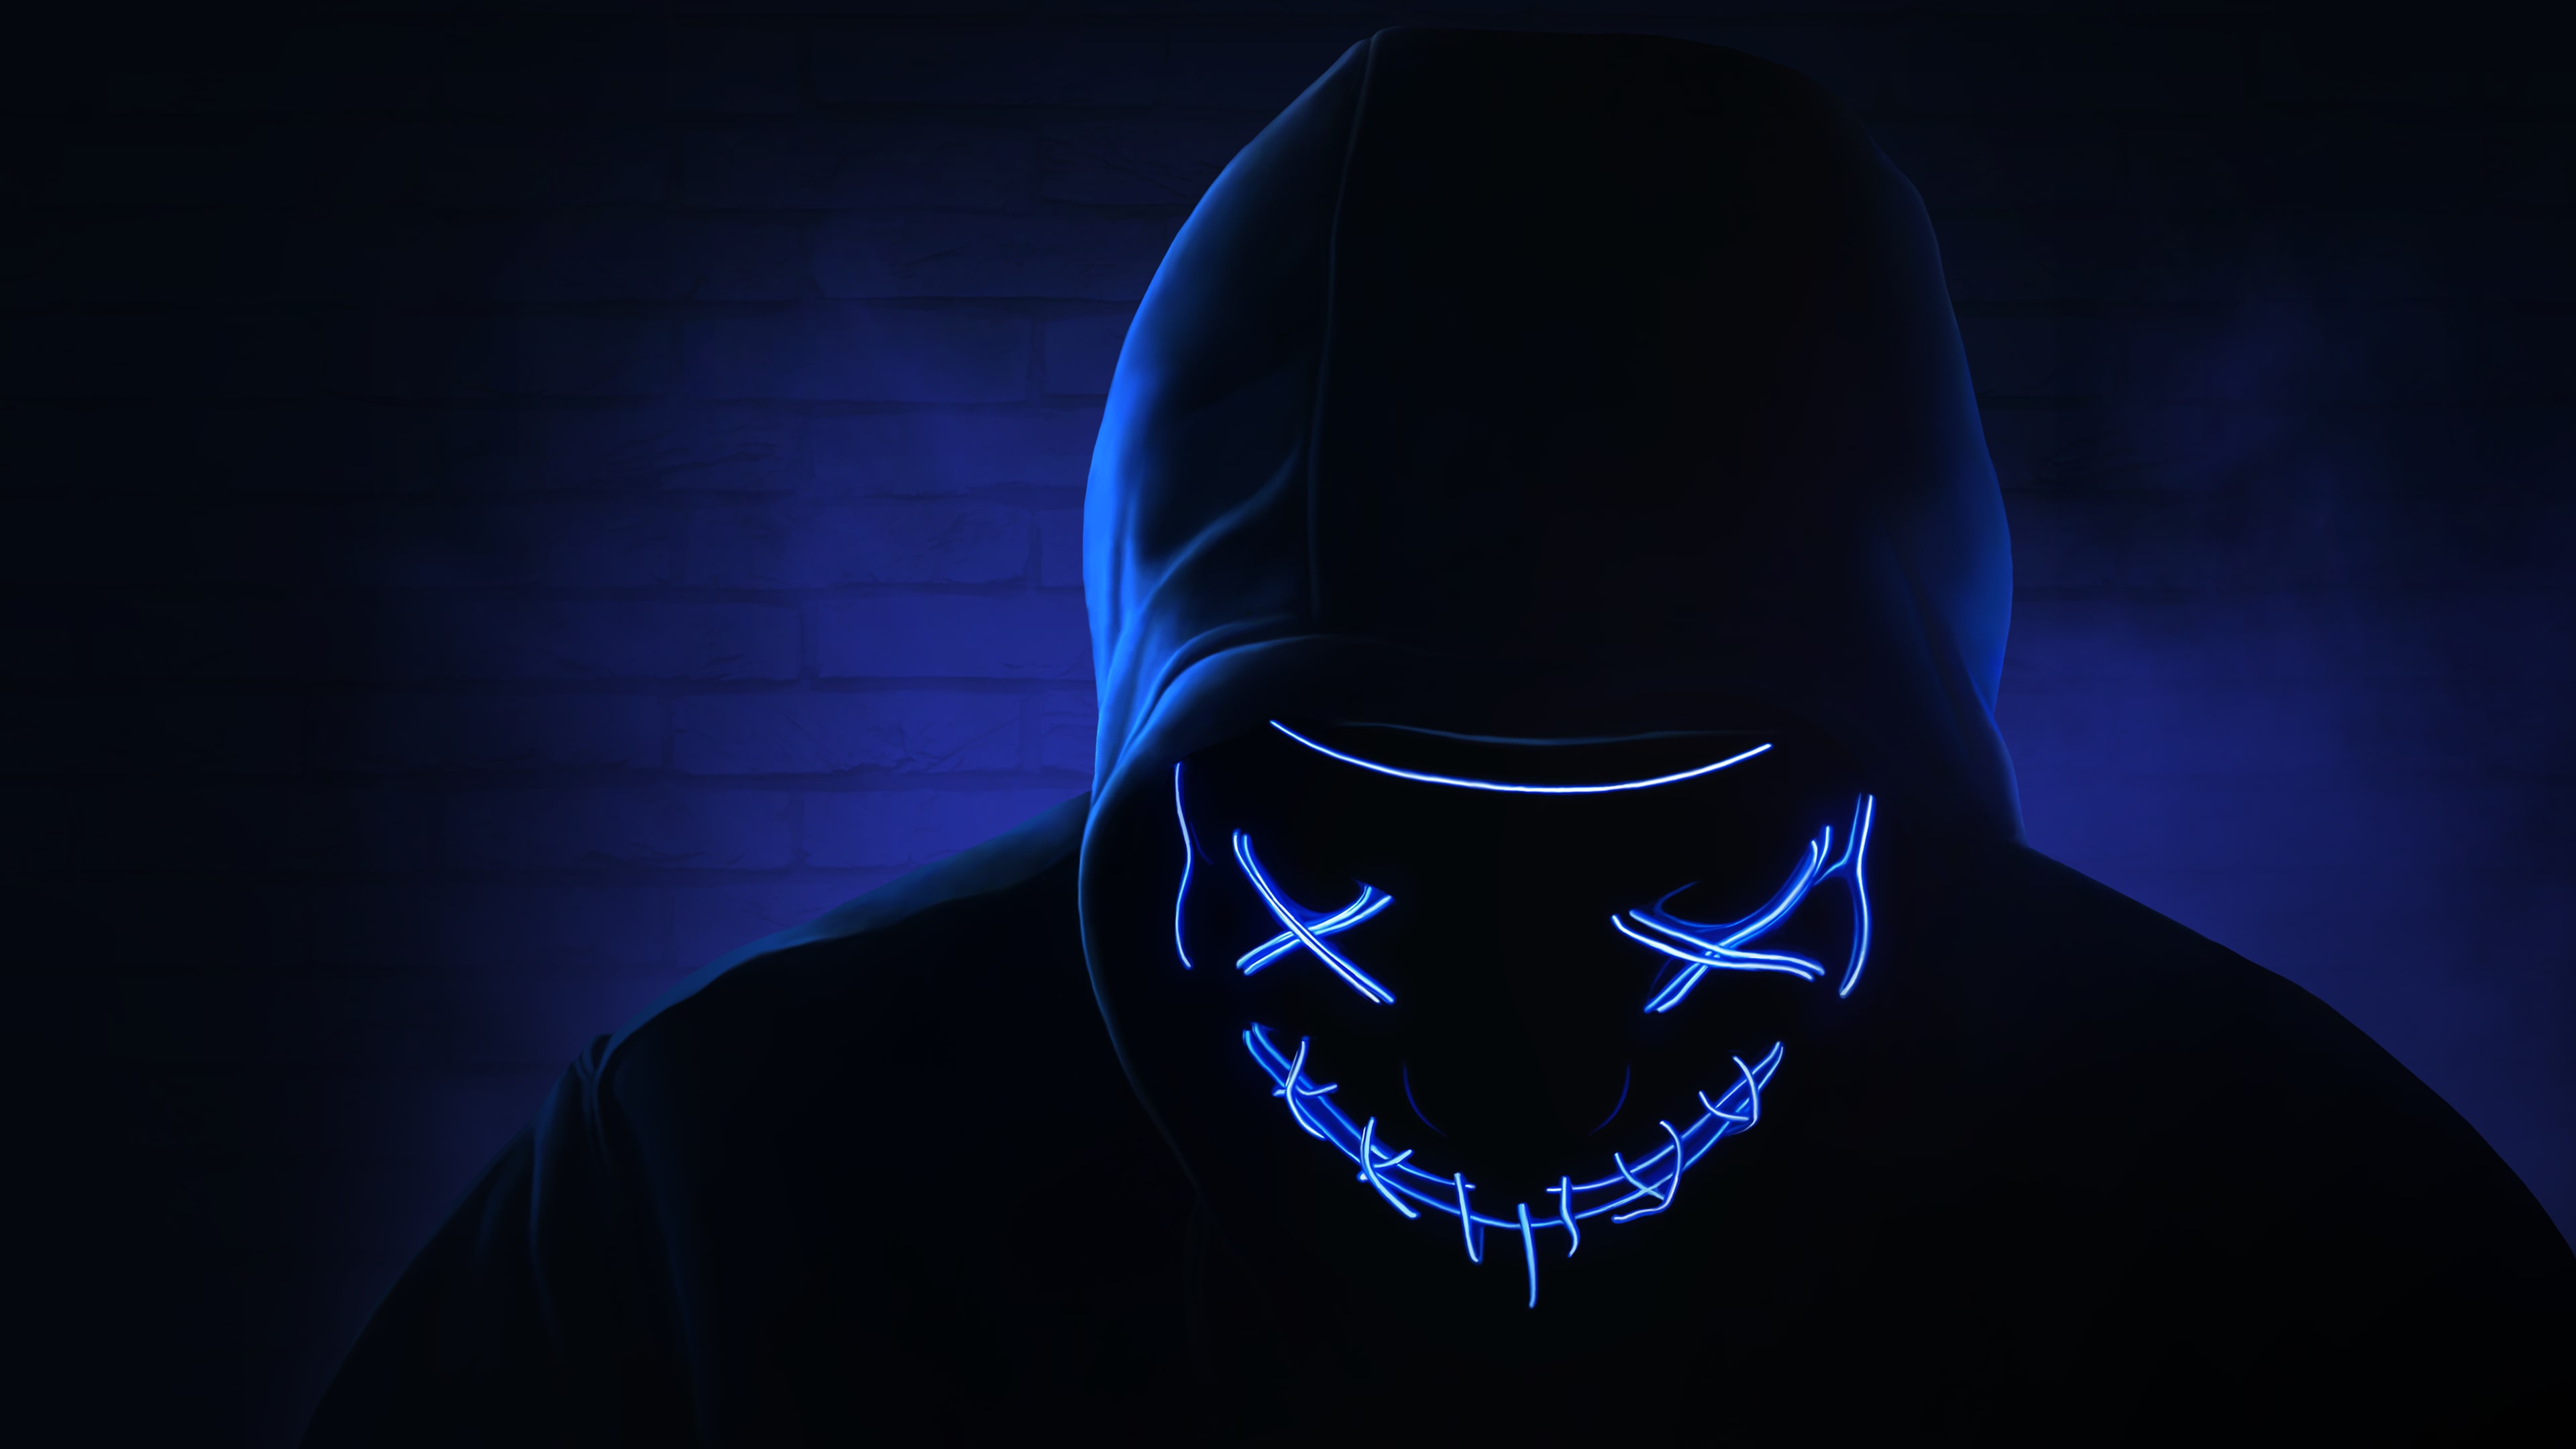 XPOSED - Neon Hacker Dynamic Theme